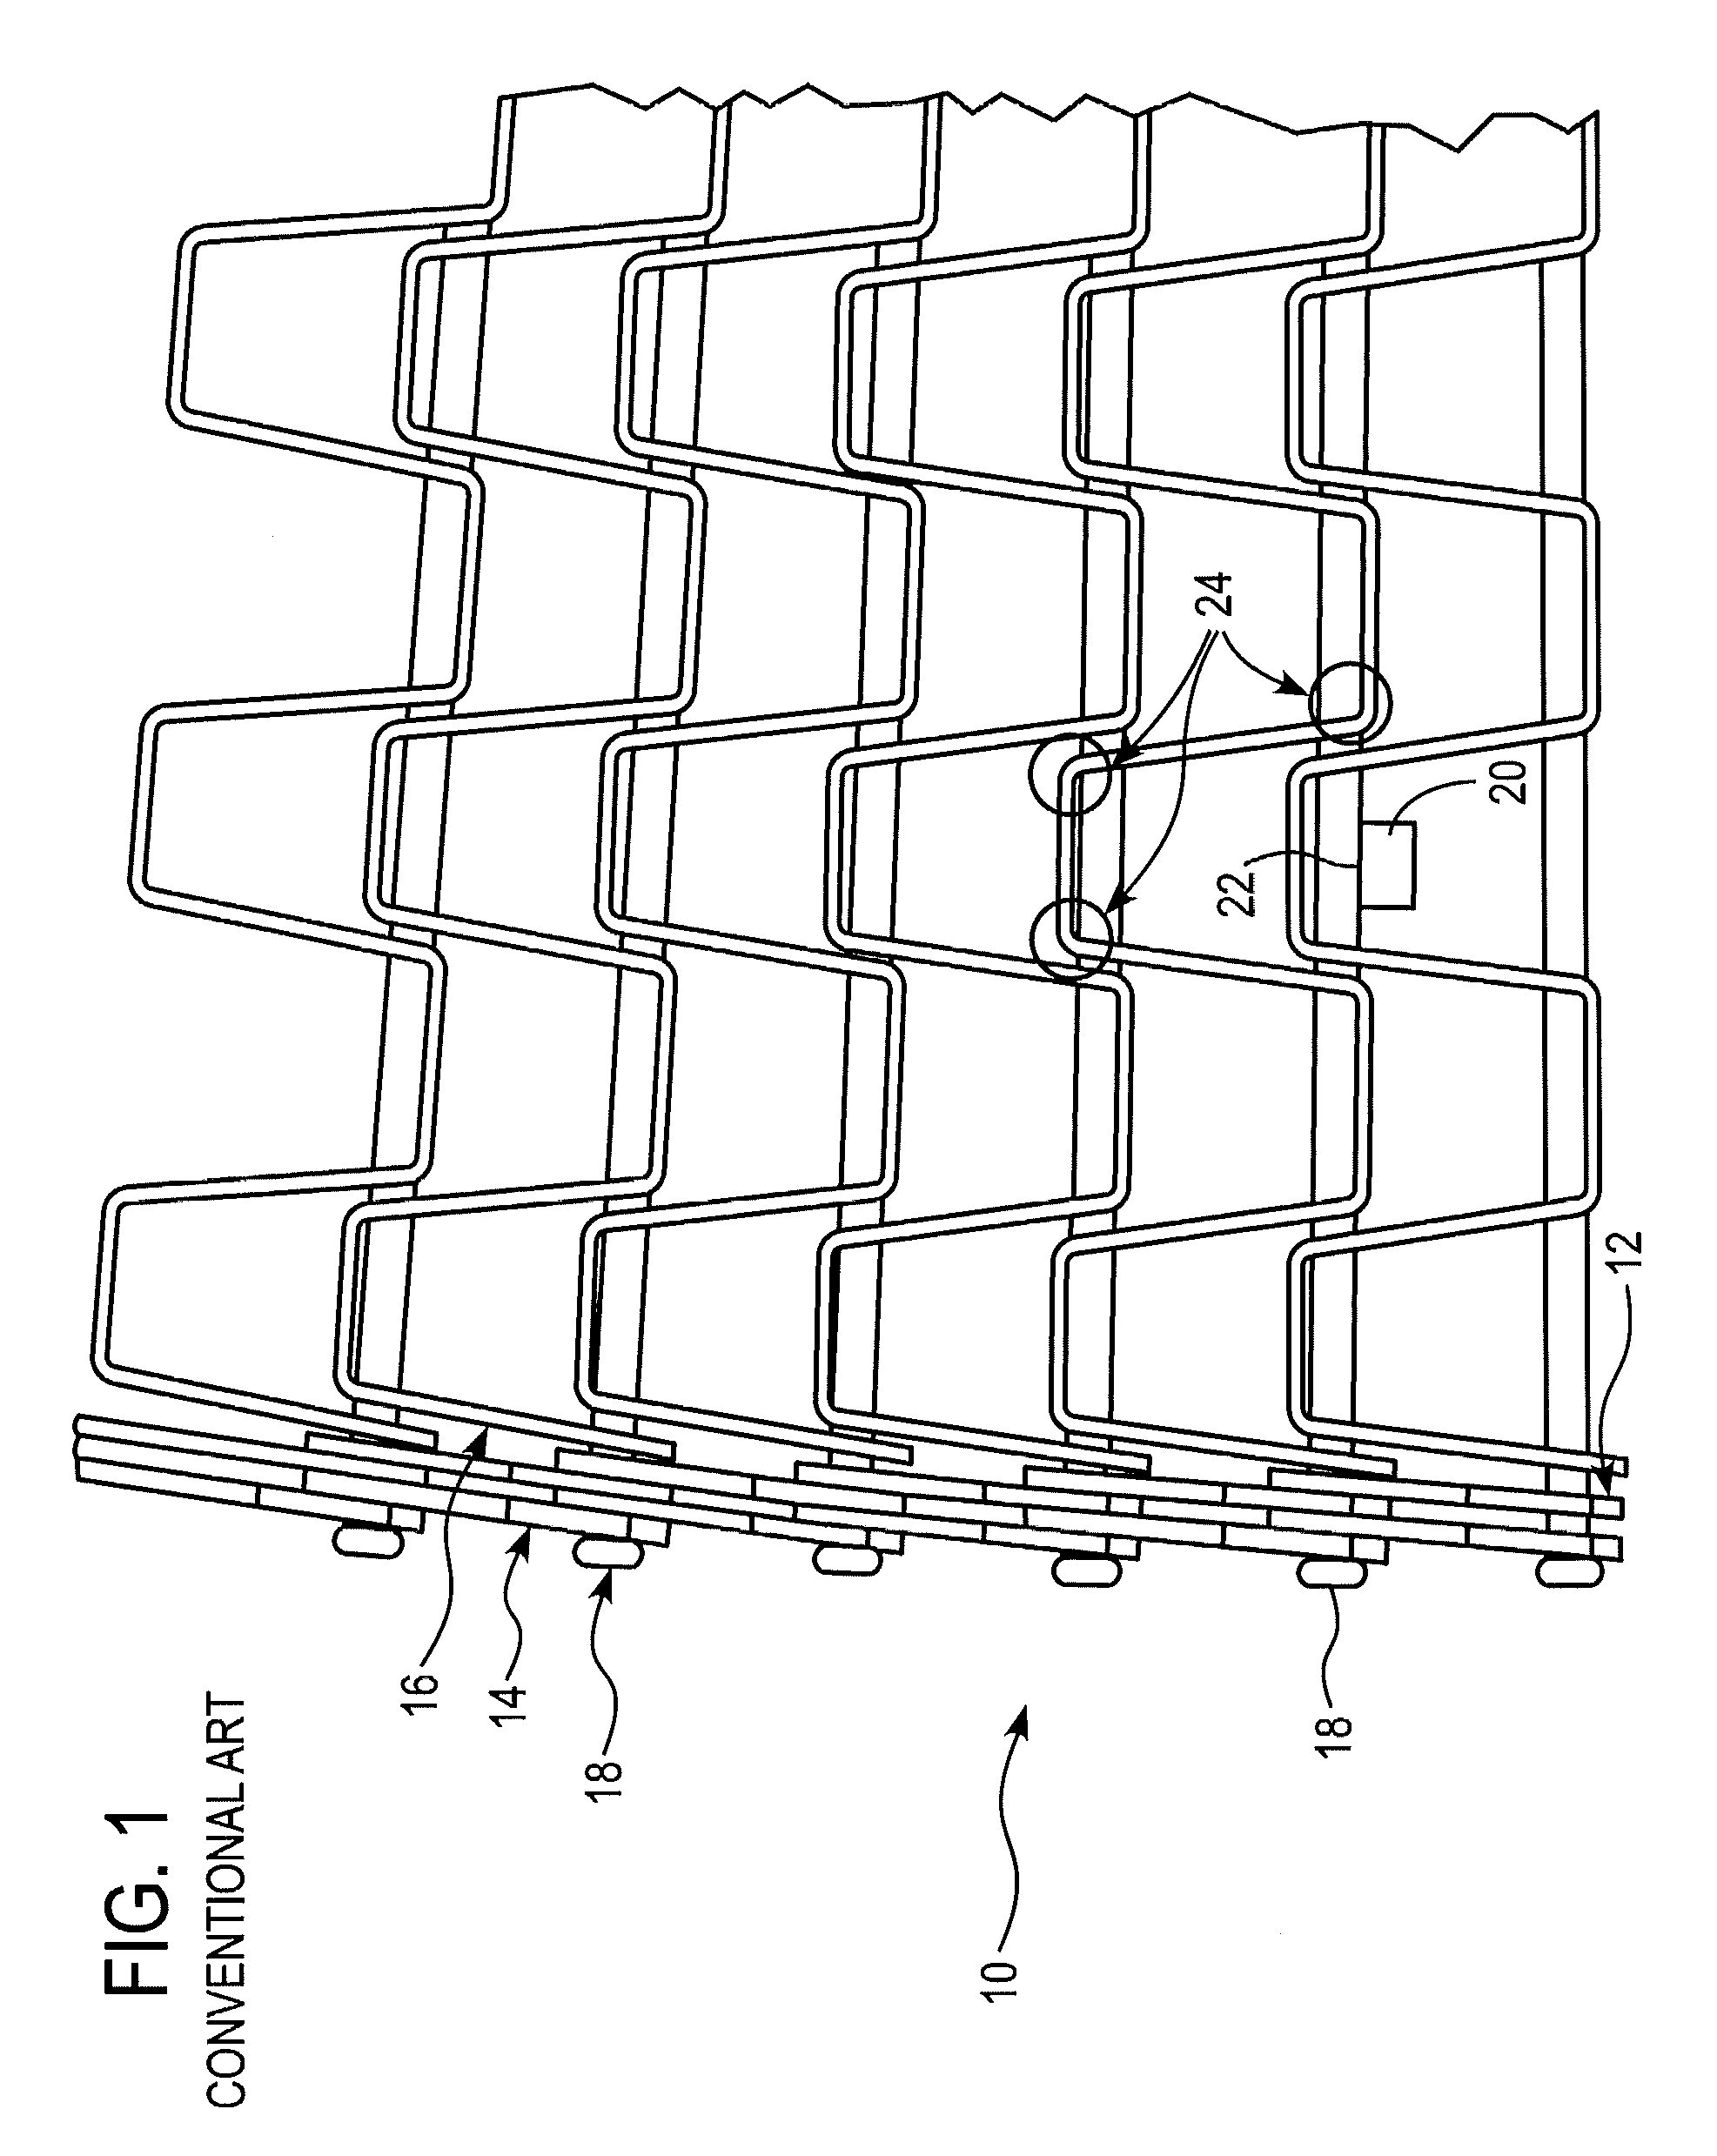 Conveyor belt with improved edge configuration